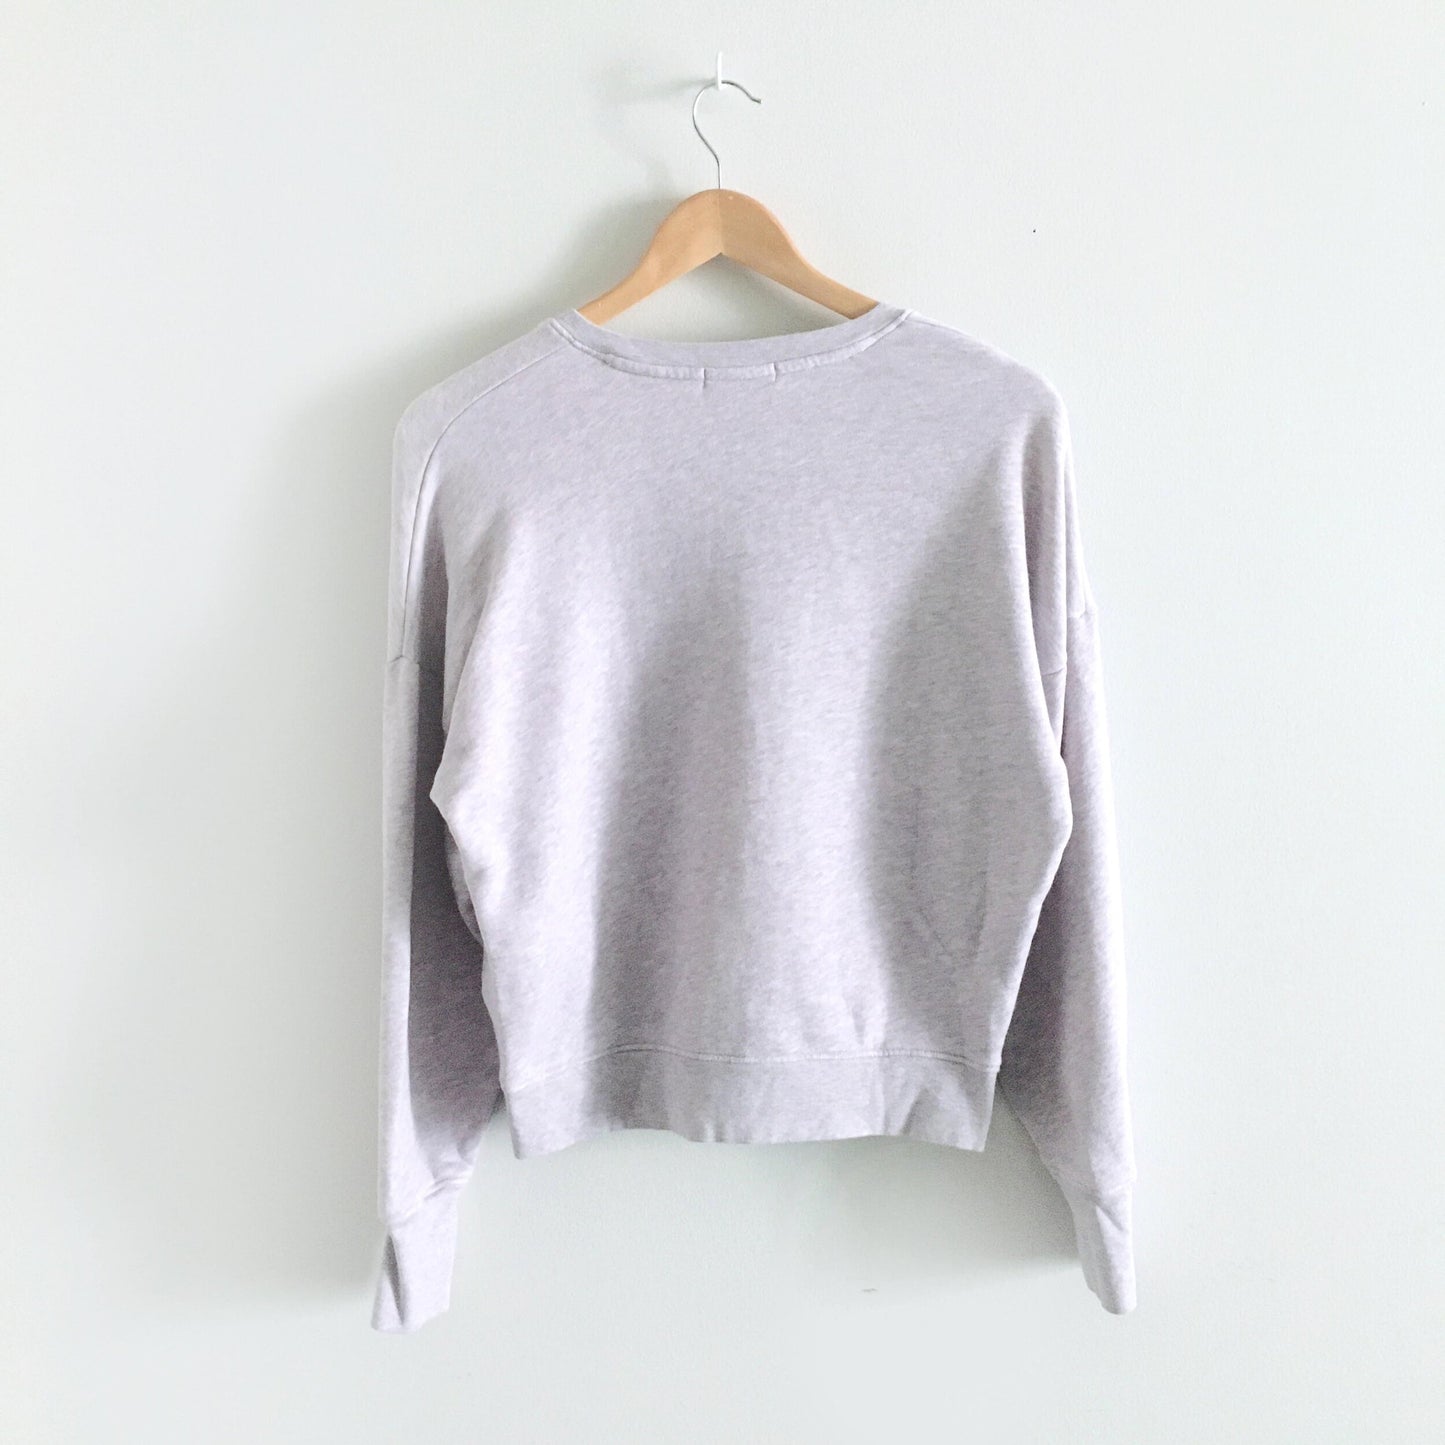 Joie Warda Ruched Sweatshirt - size Small